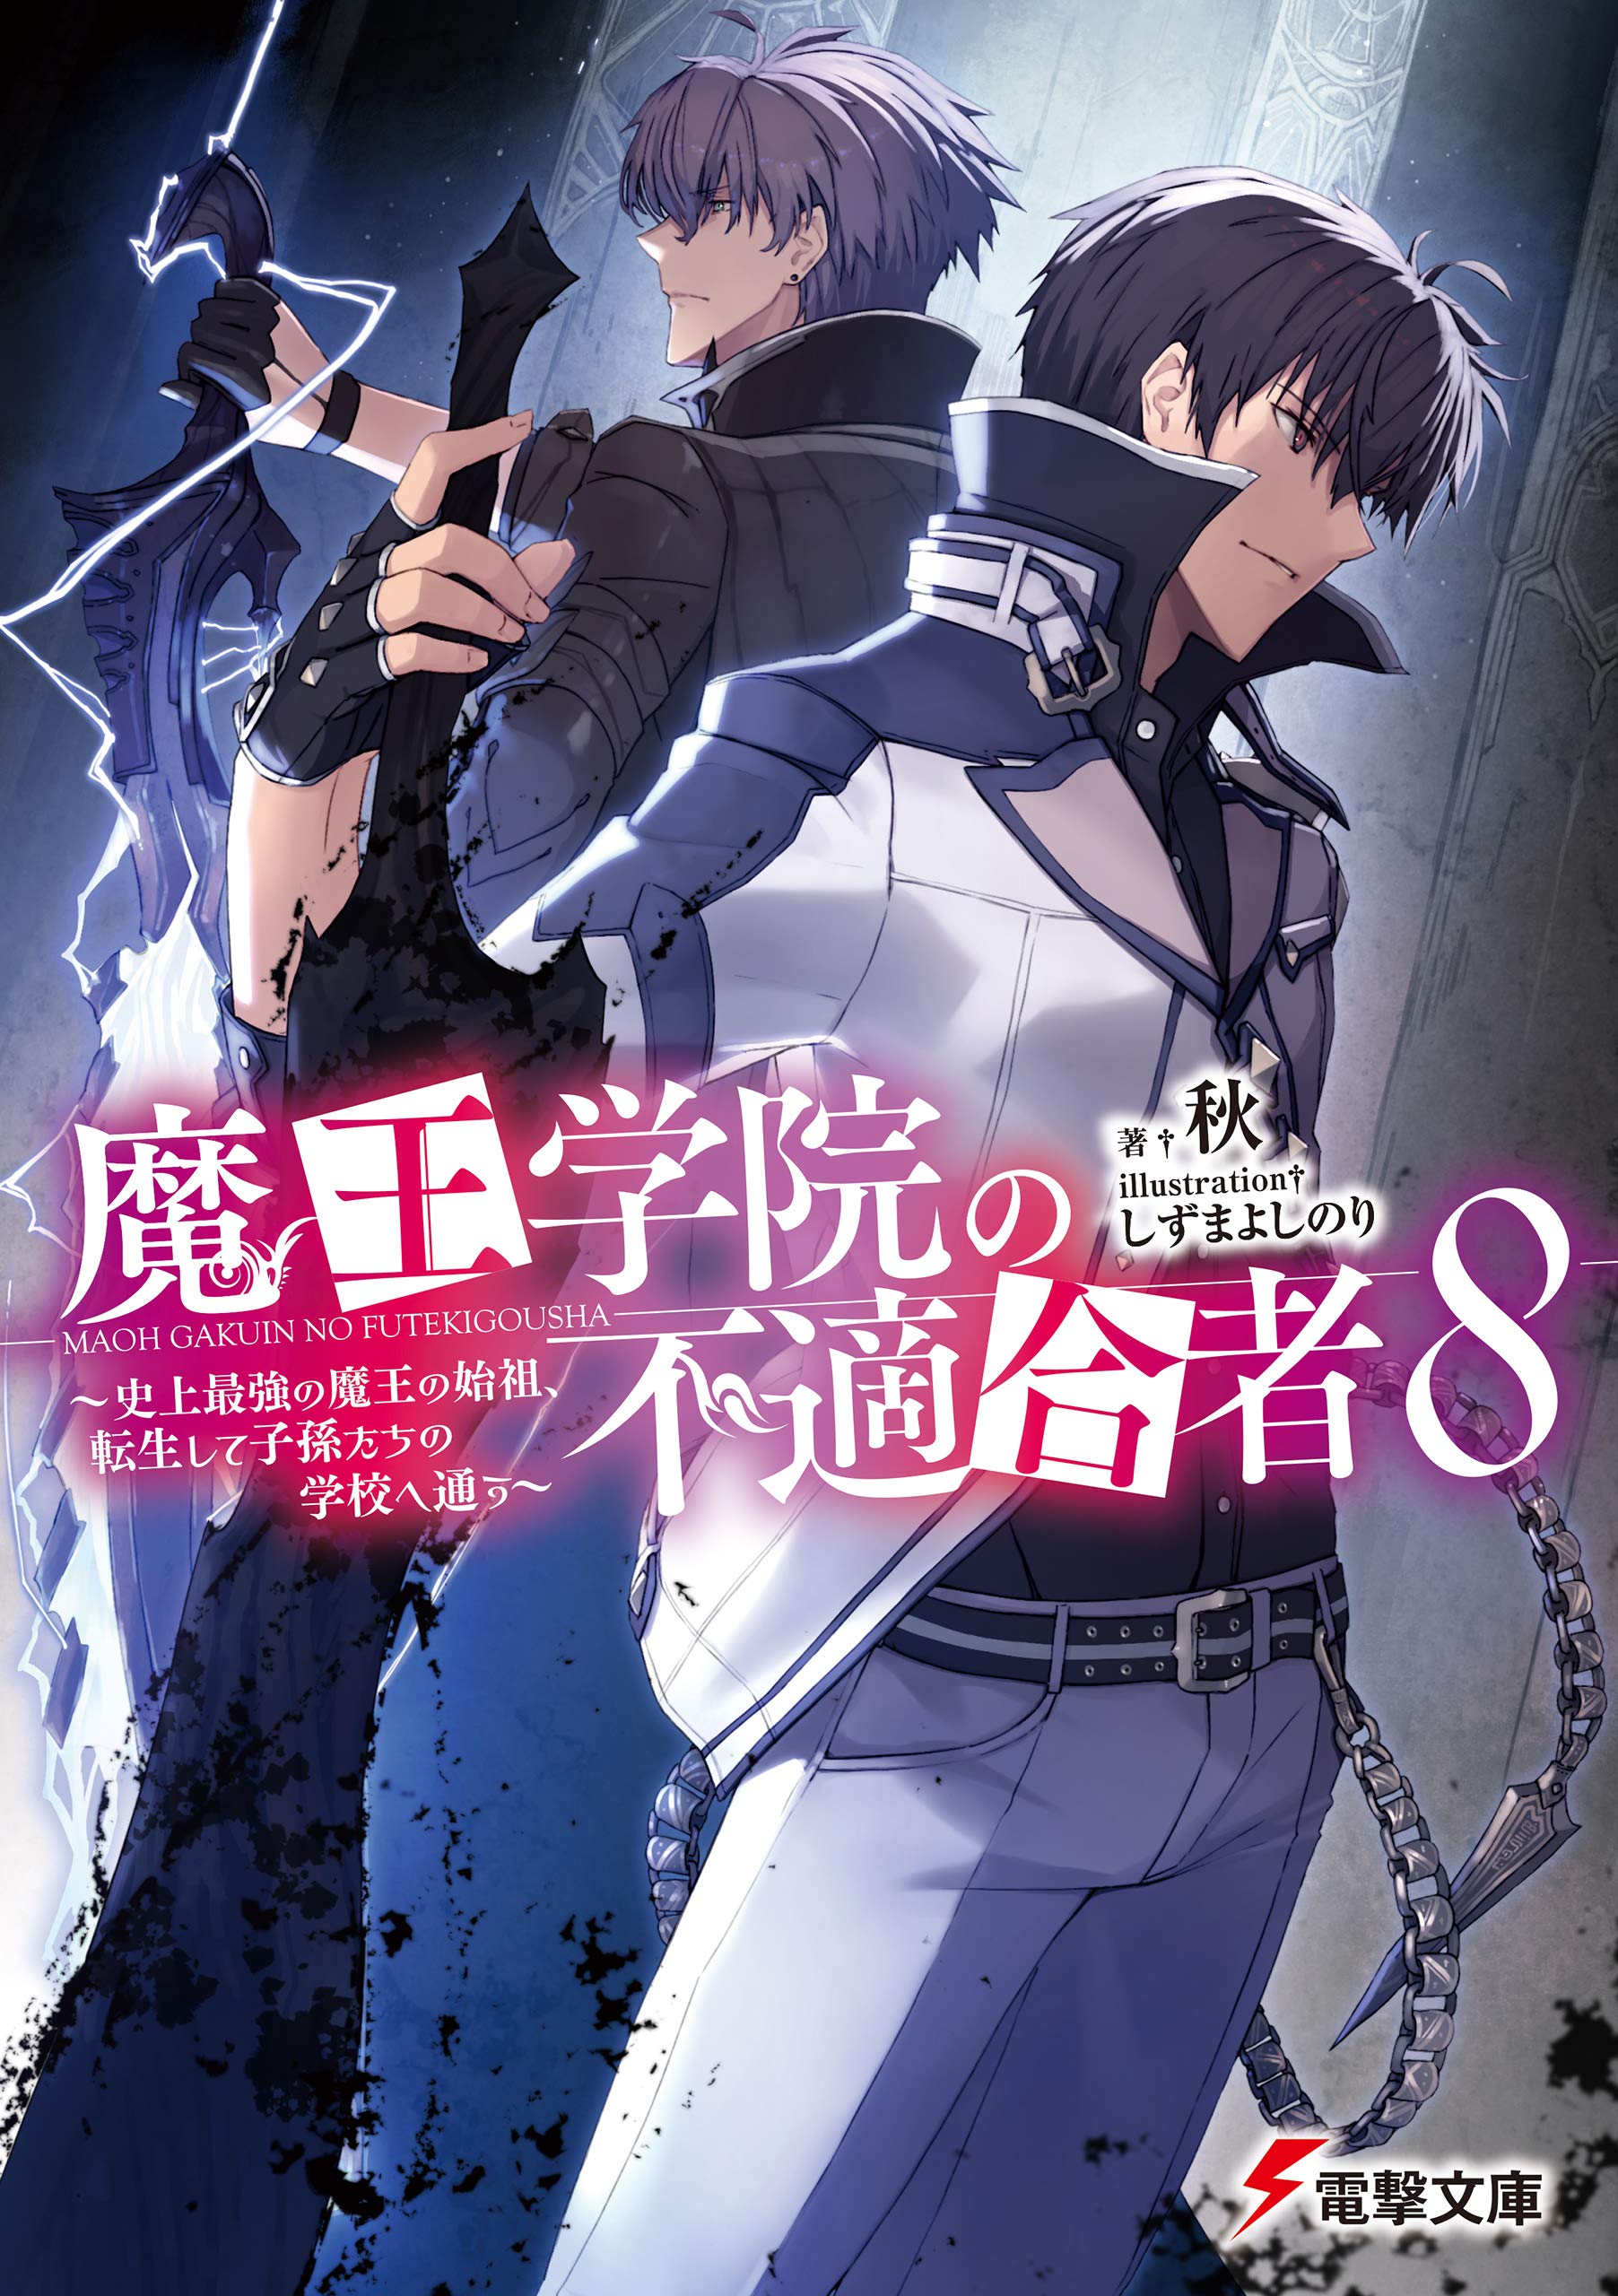 Manga Mogura RE on X: Knights & Magic light novel series by